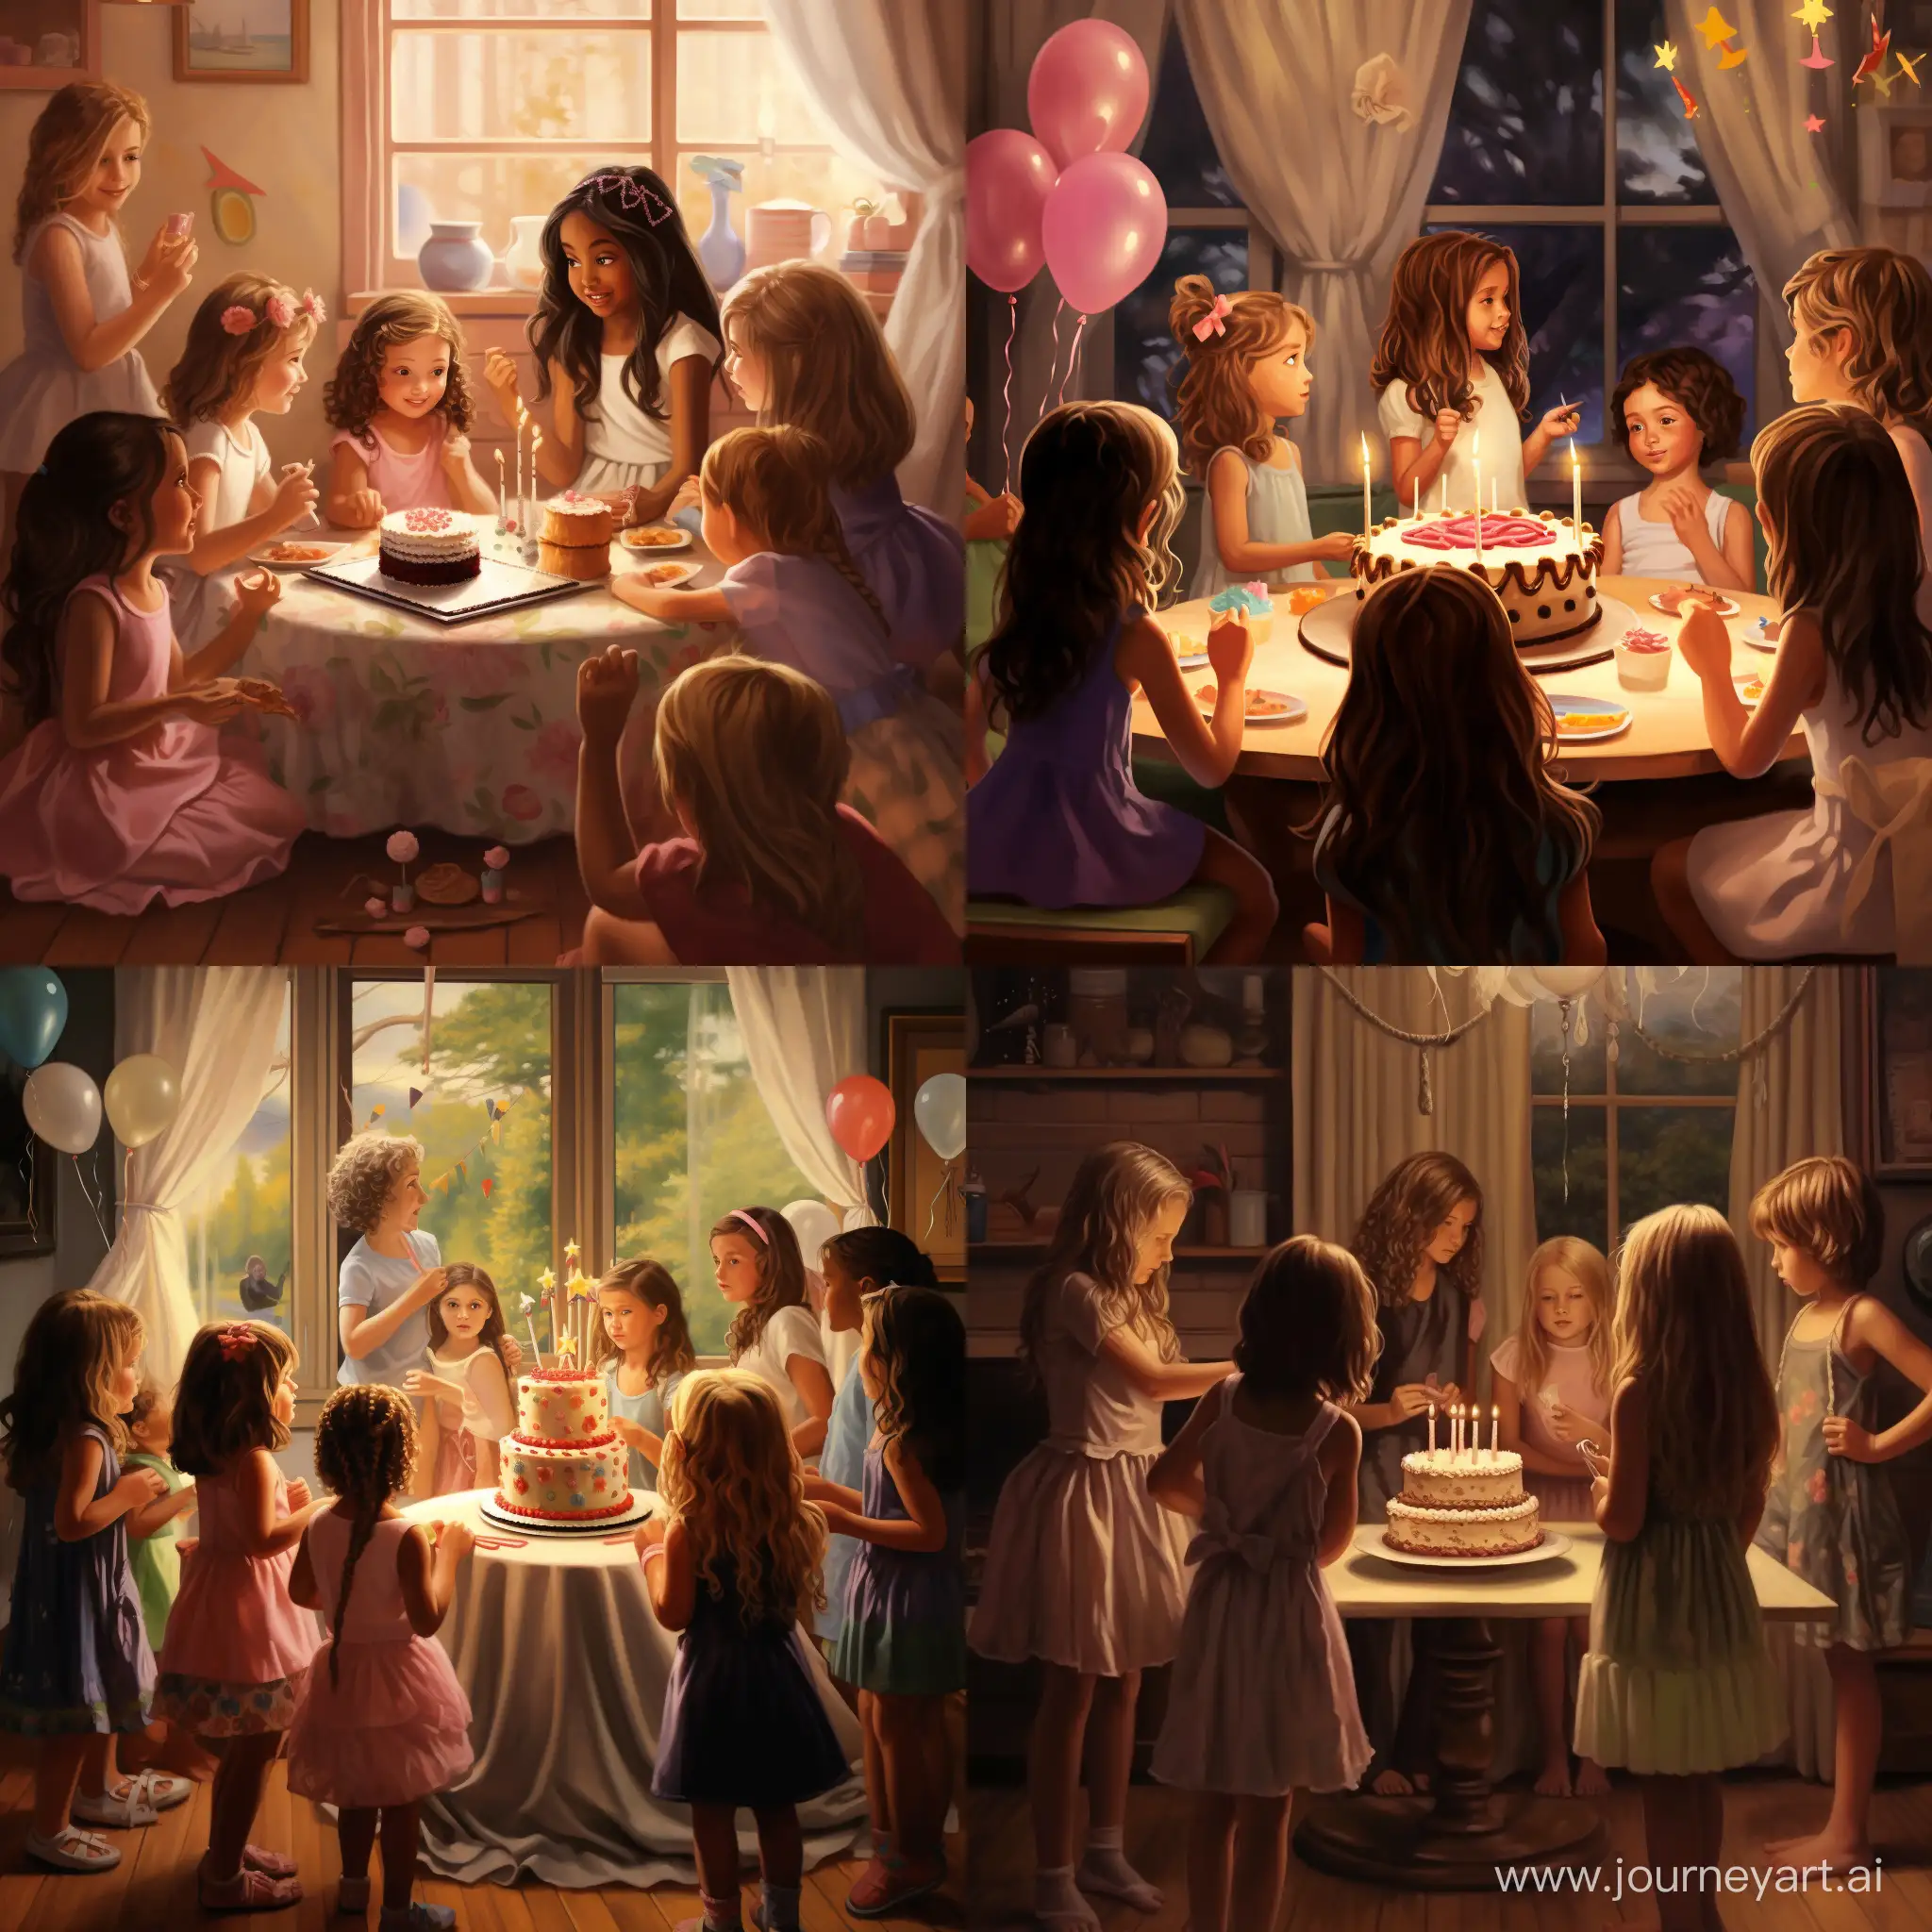 Joyful-Birthday-Celebration-Little-Girl-and-Friends-in-CakeCutting-Moment